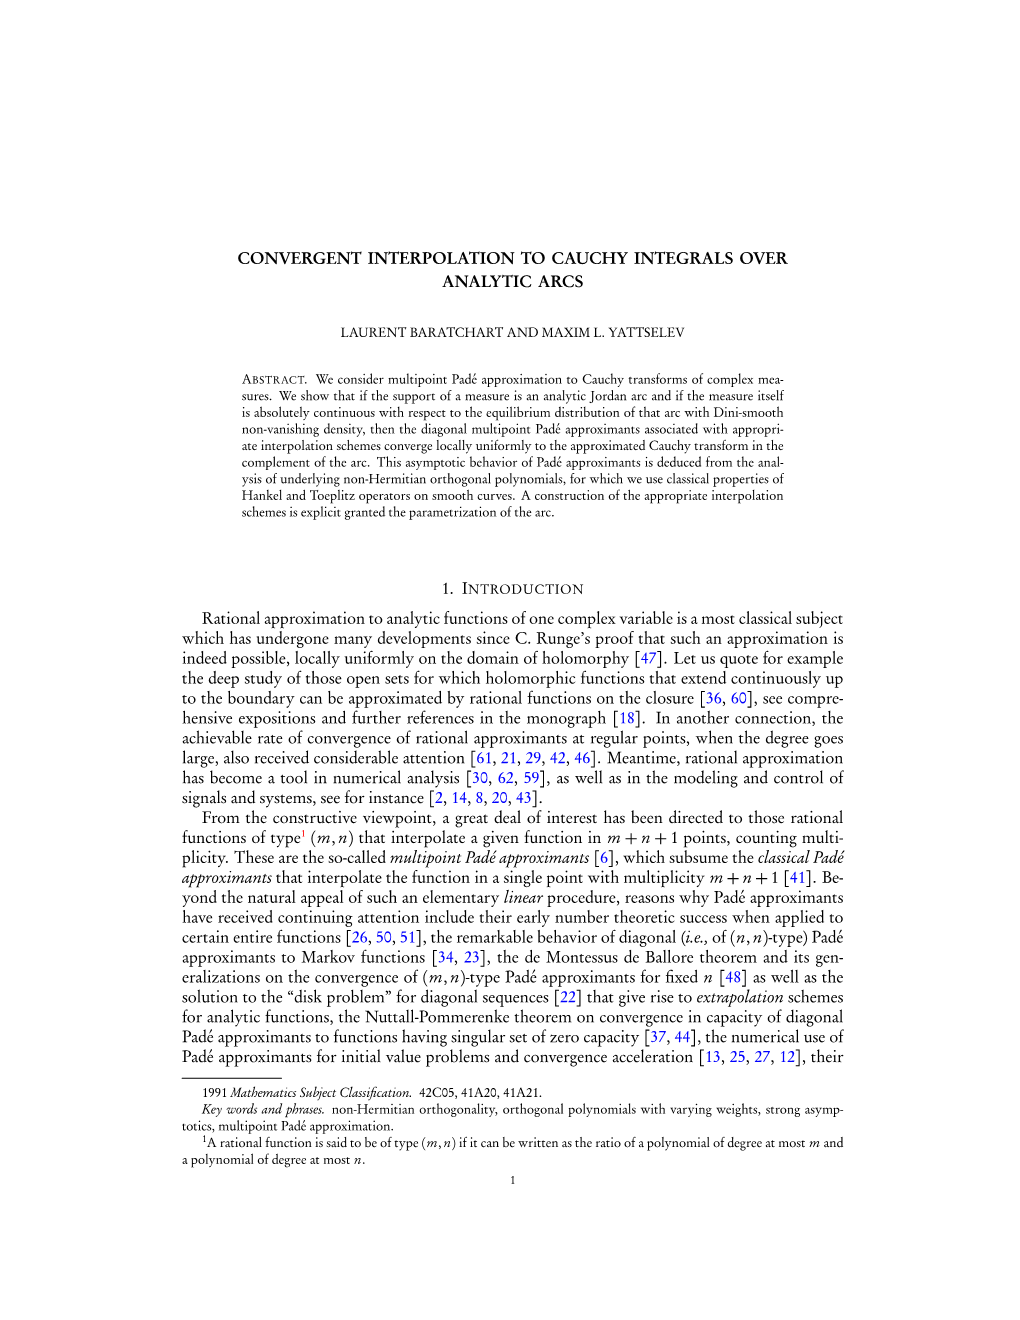 Convergent Interpolation to Cauchy Integrals Over Analytic Arcs